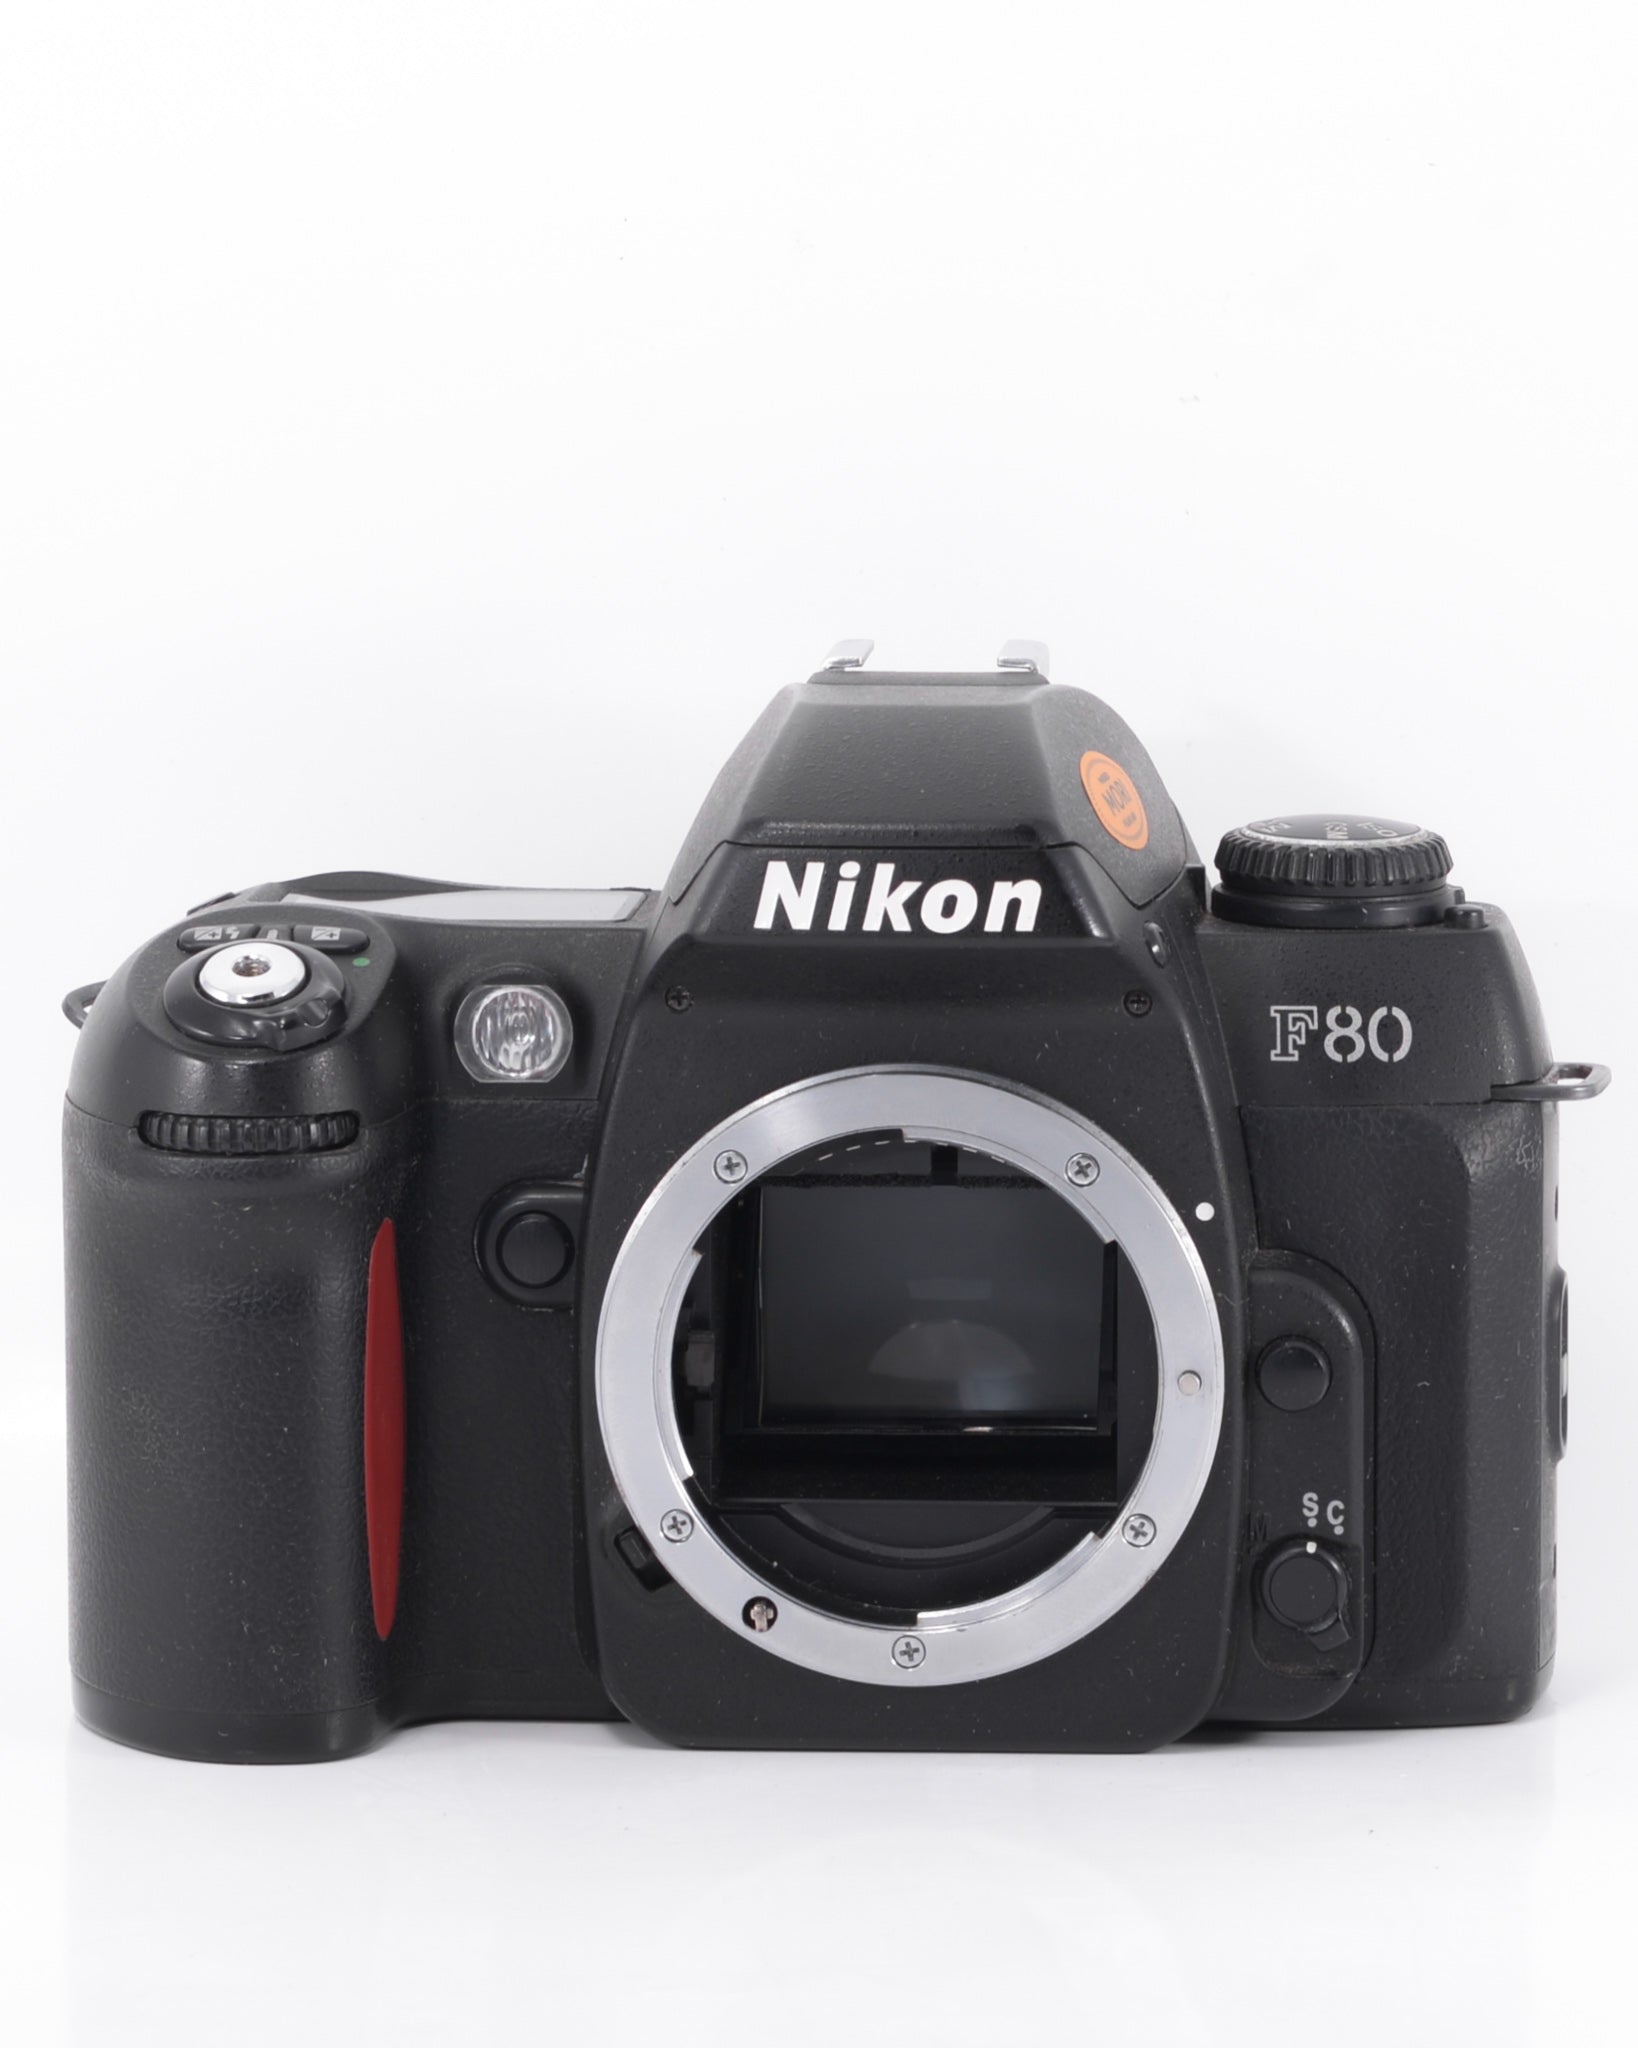 Nikon F80 35mm SLR film camera body only